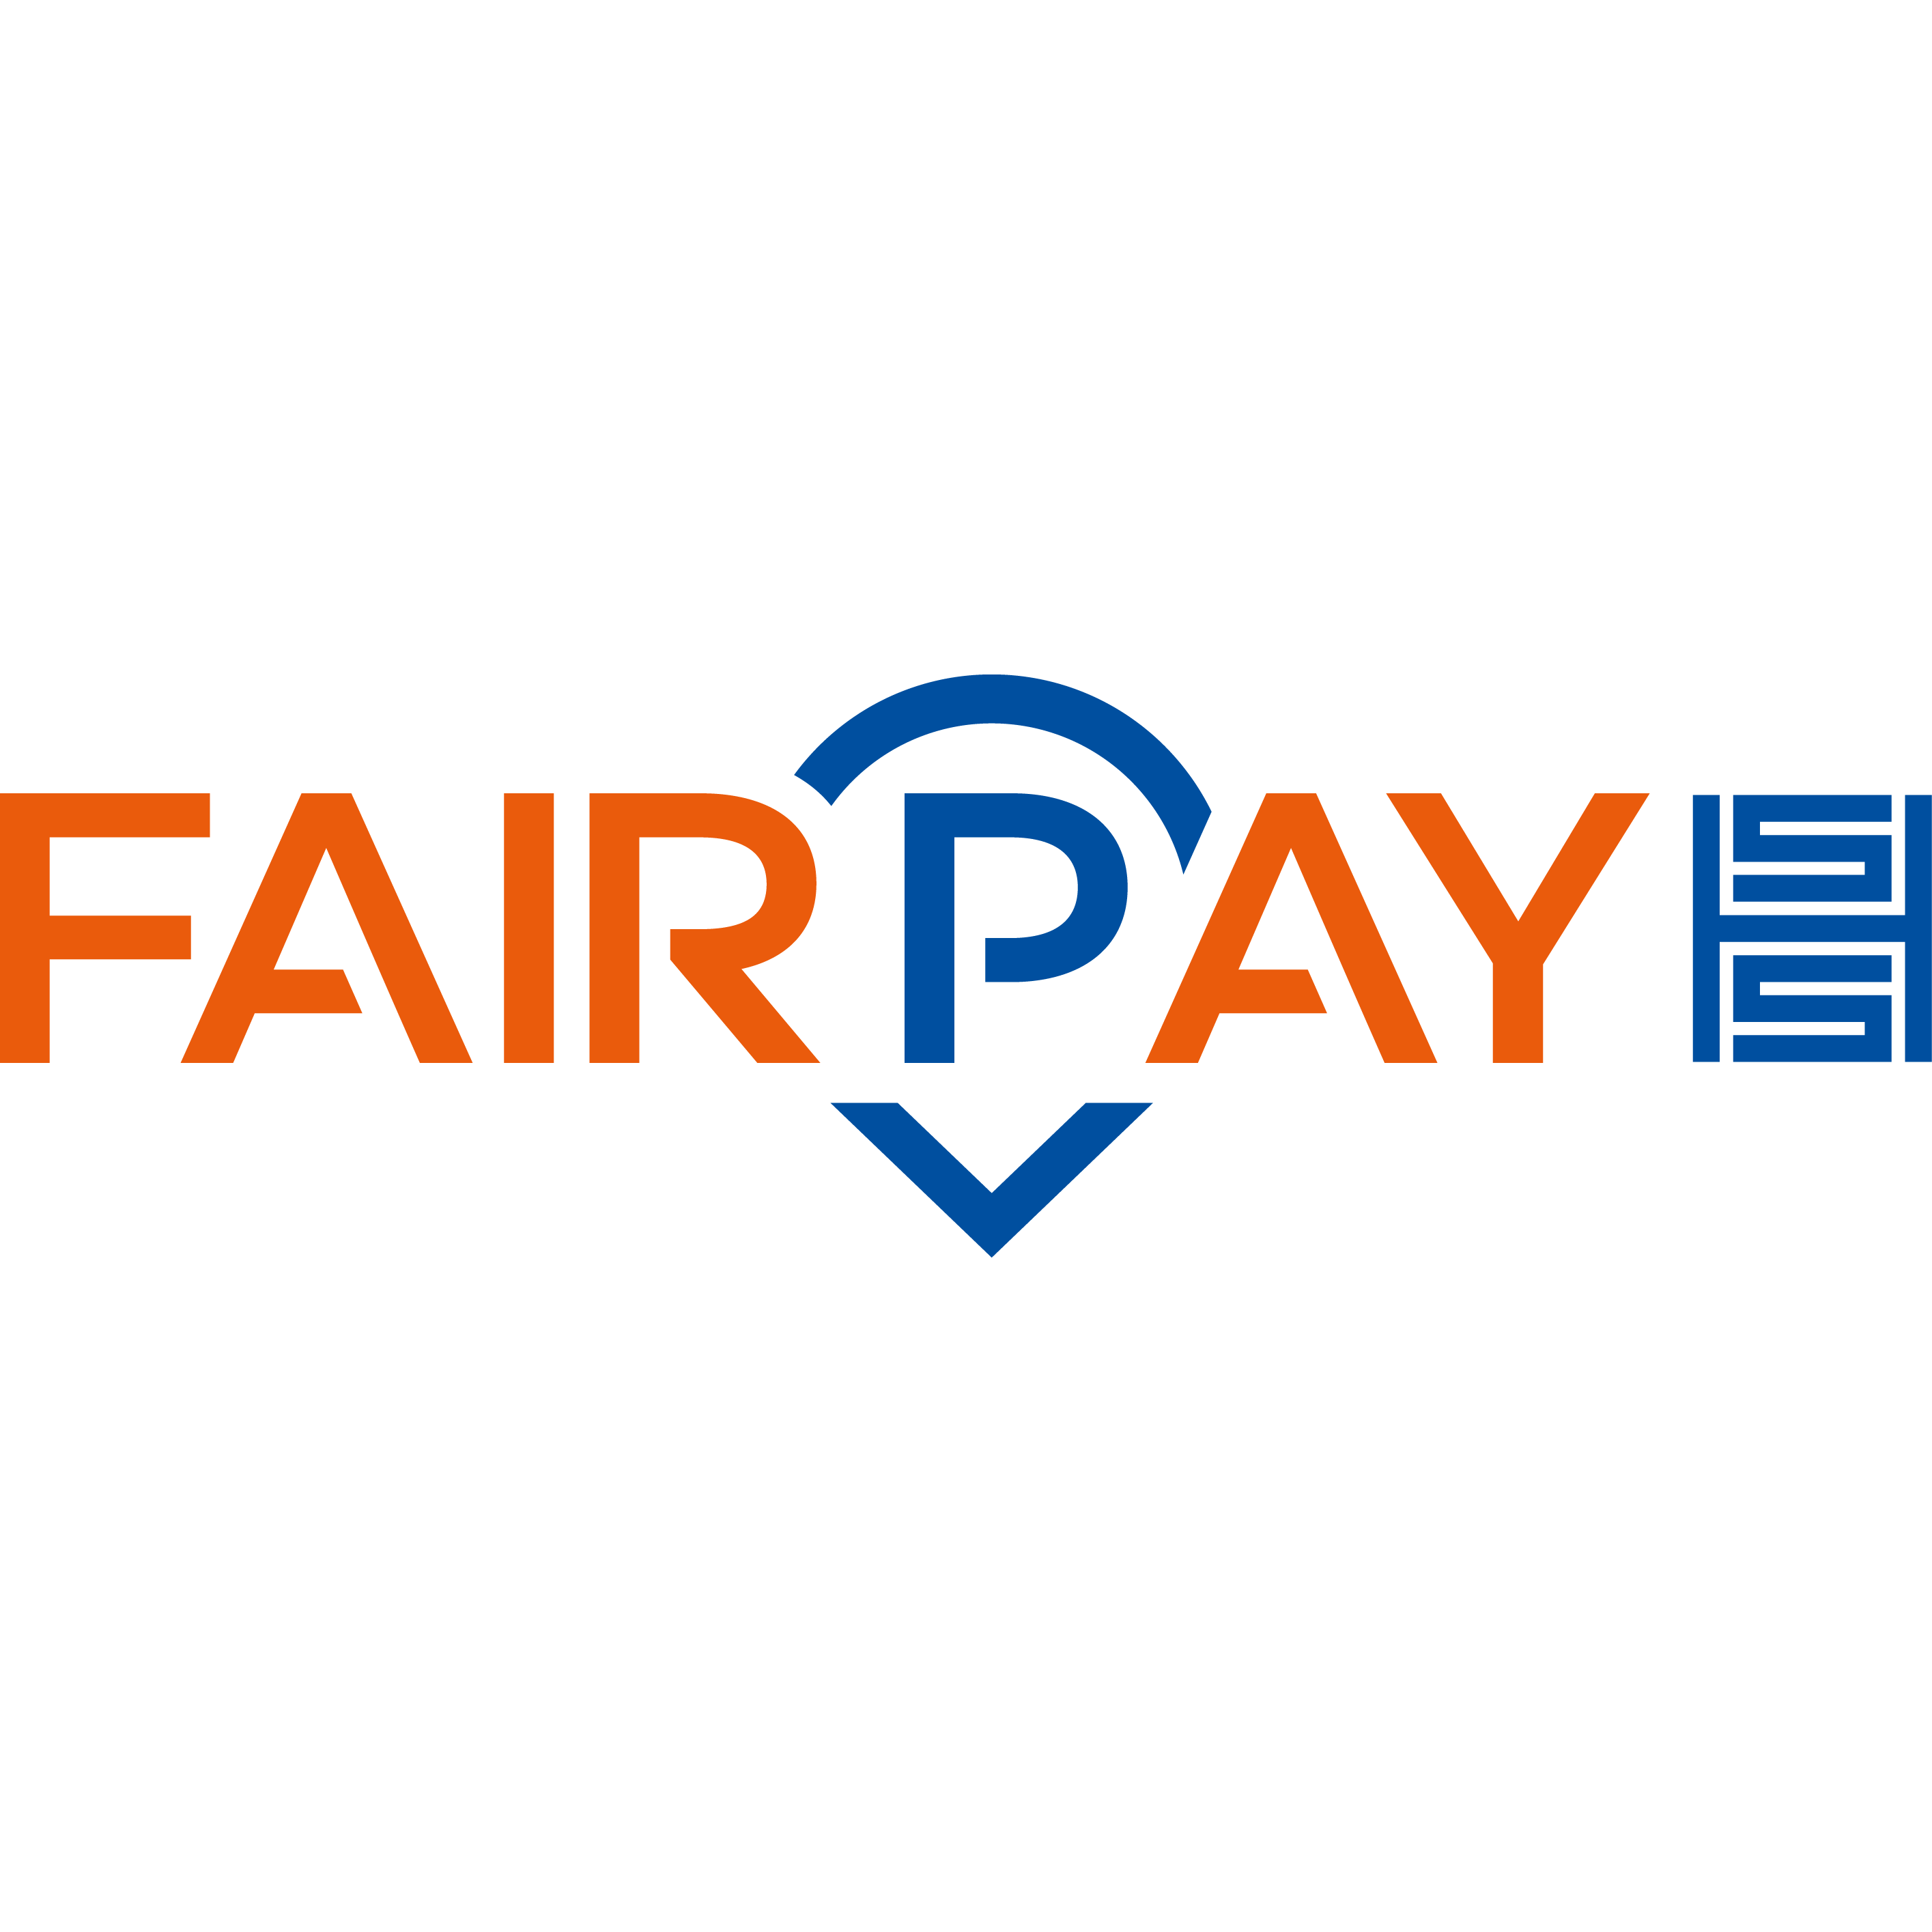 FAIRPAY SHS in Hürth im Rheinland - Logo